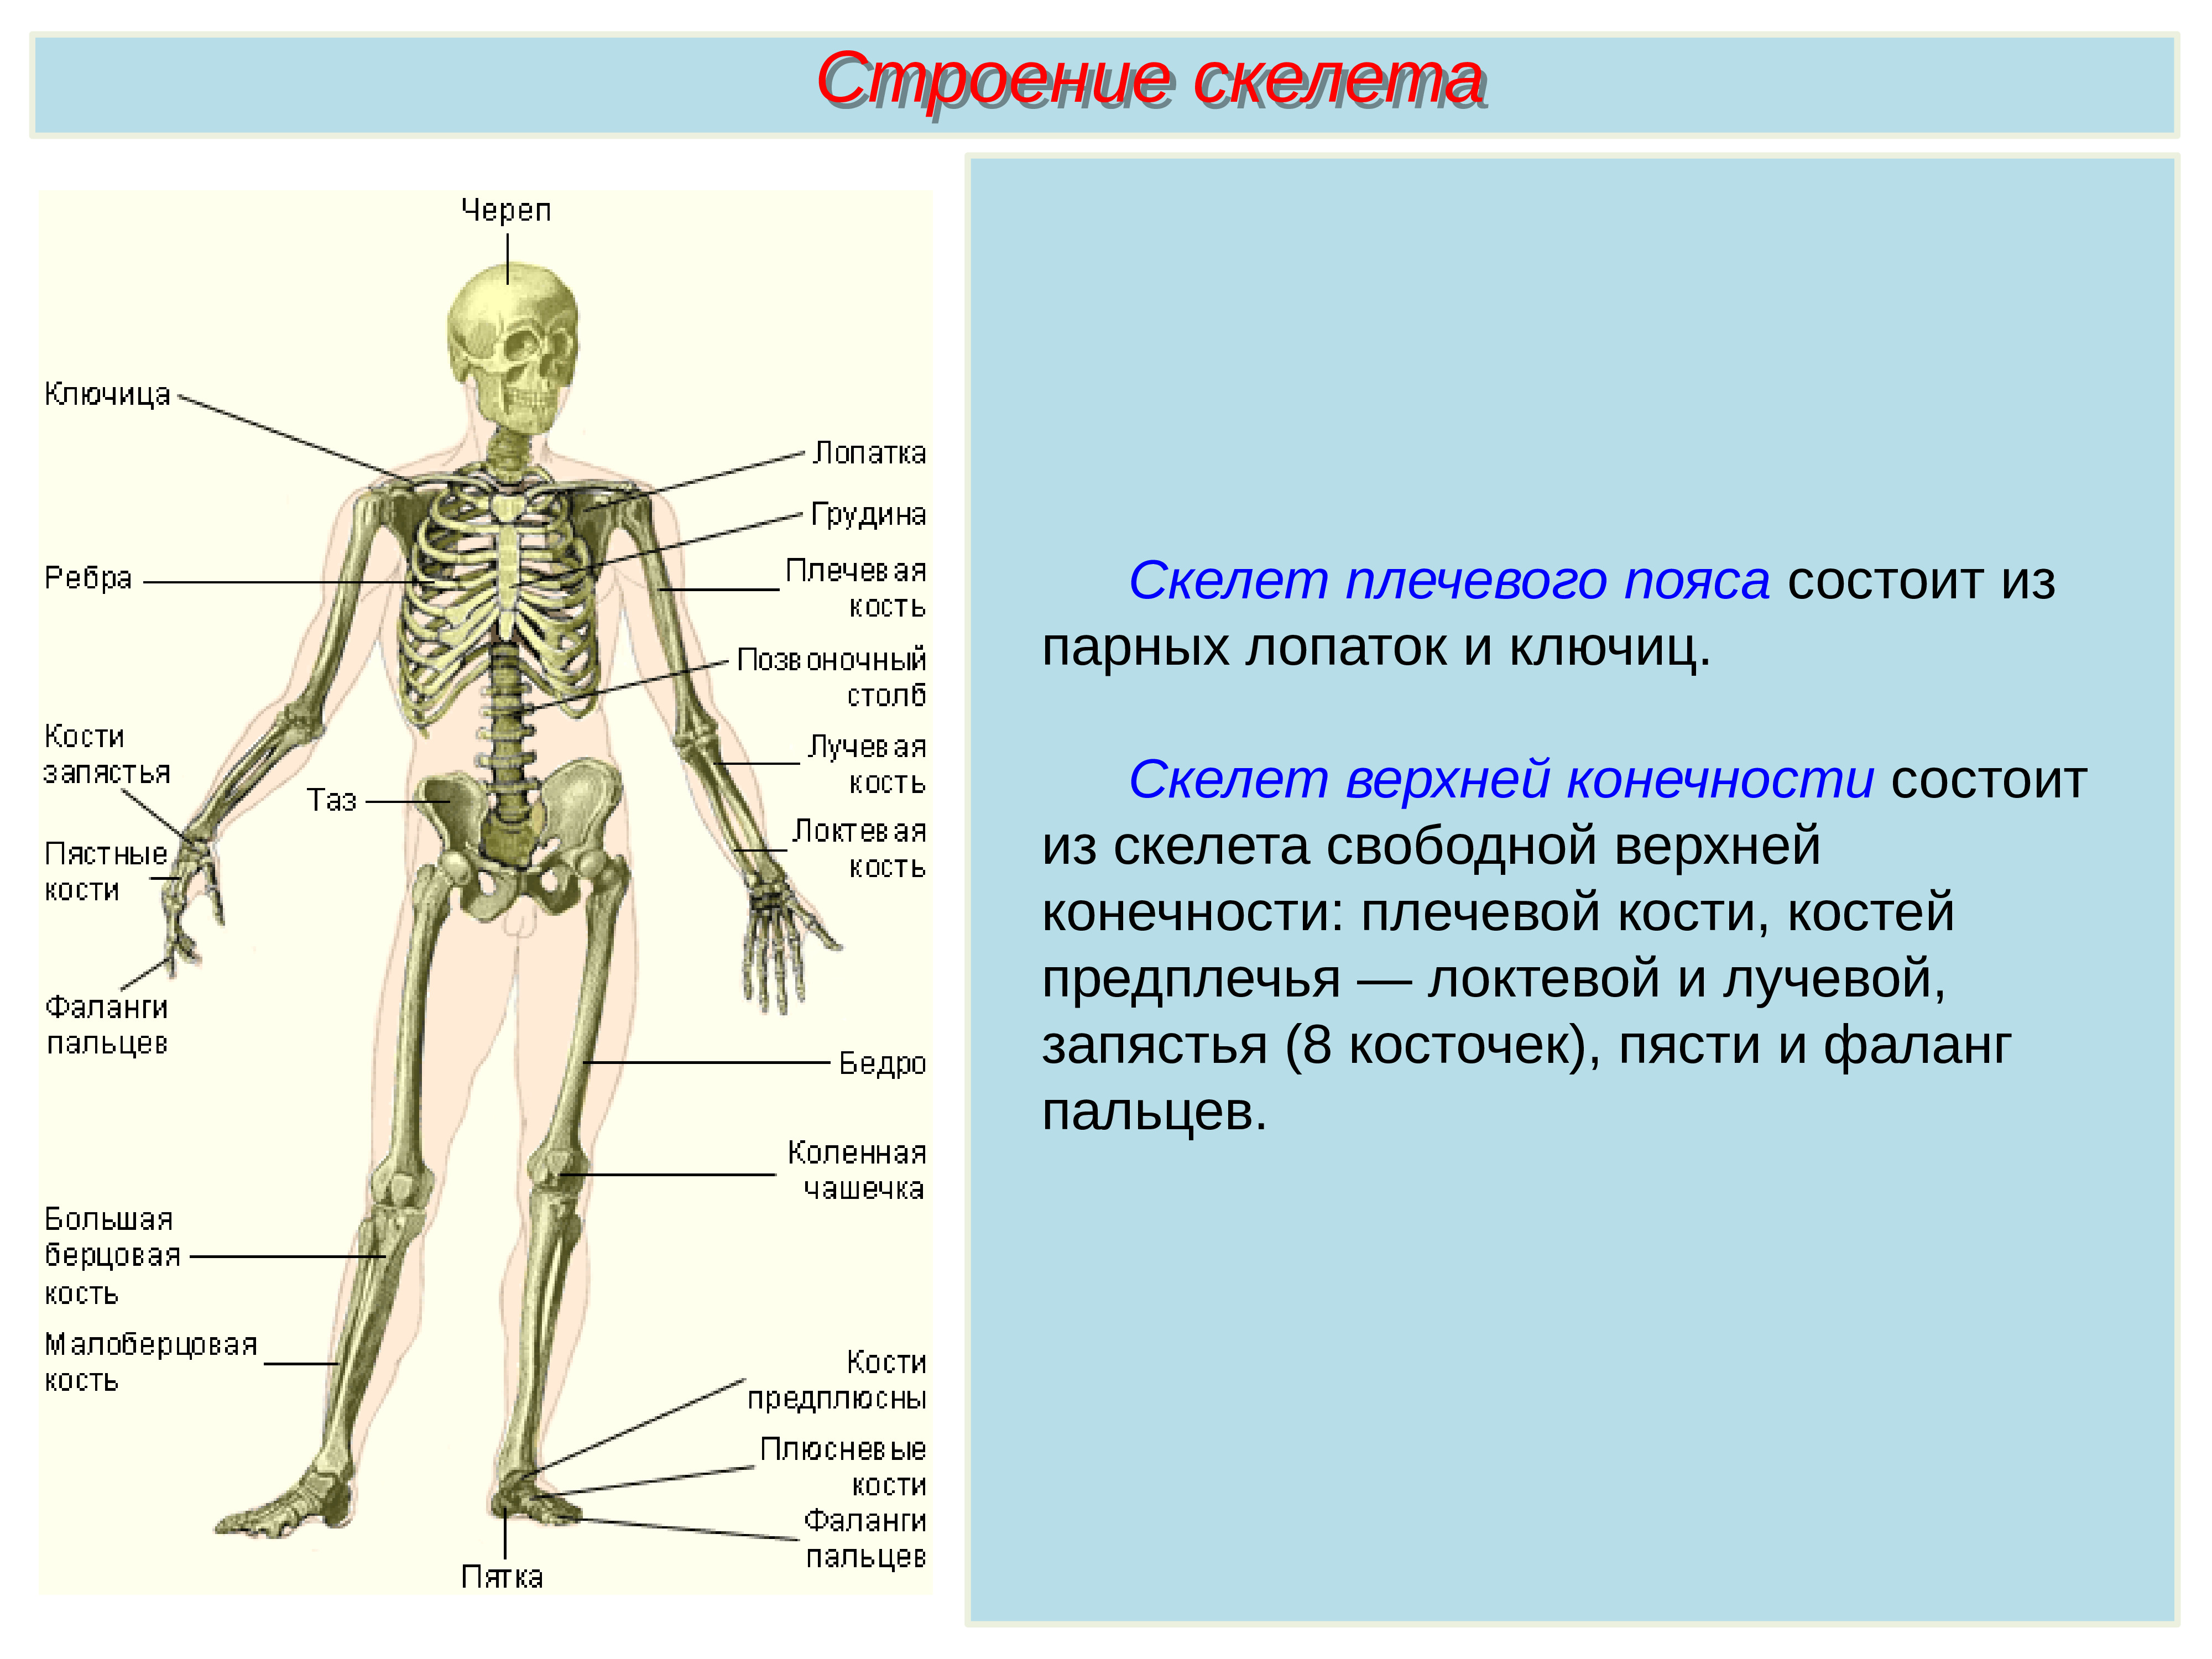 Подпишите названия костей скелета. Биология 8 класс скелет строение состав и соединение костей. Строение скелета туловища человека. Скелет туловища Тип соединения костей. Название костей скелета туловища.